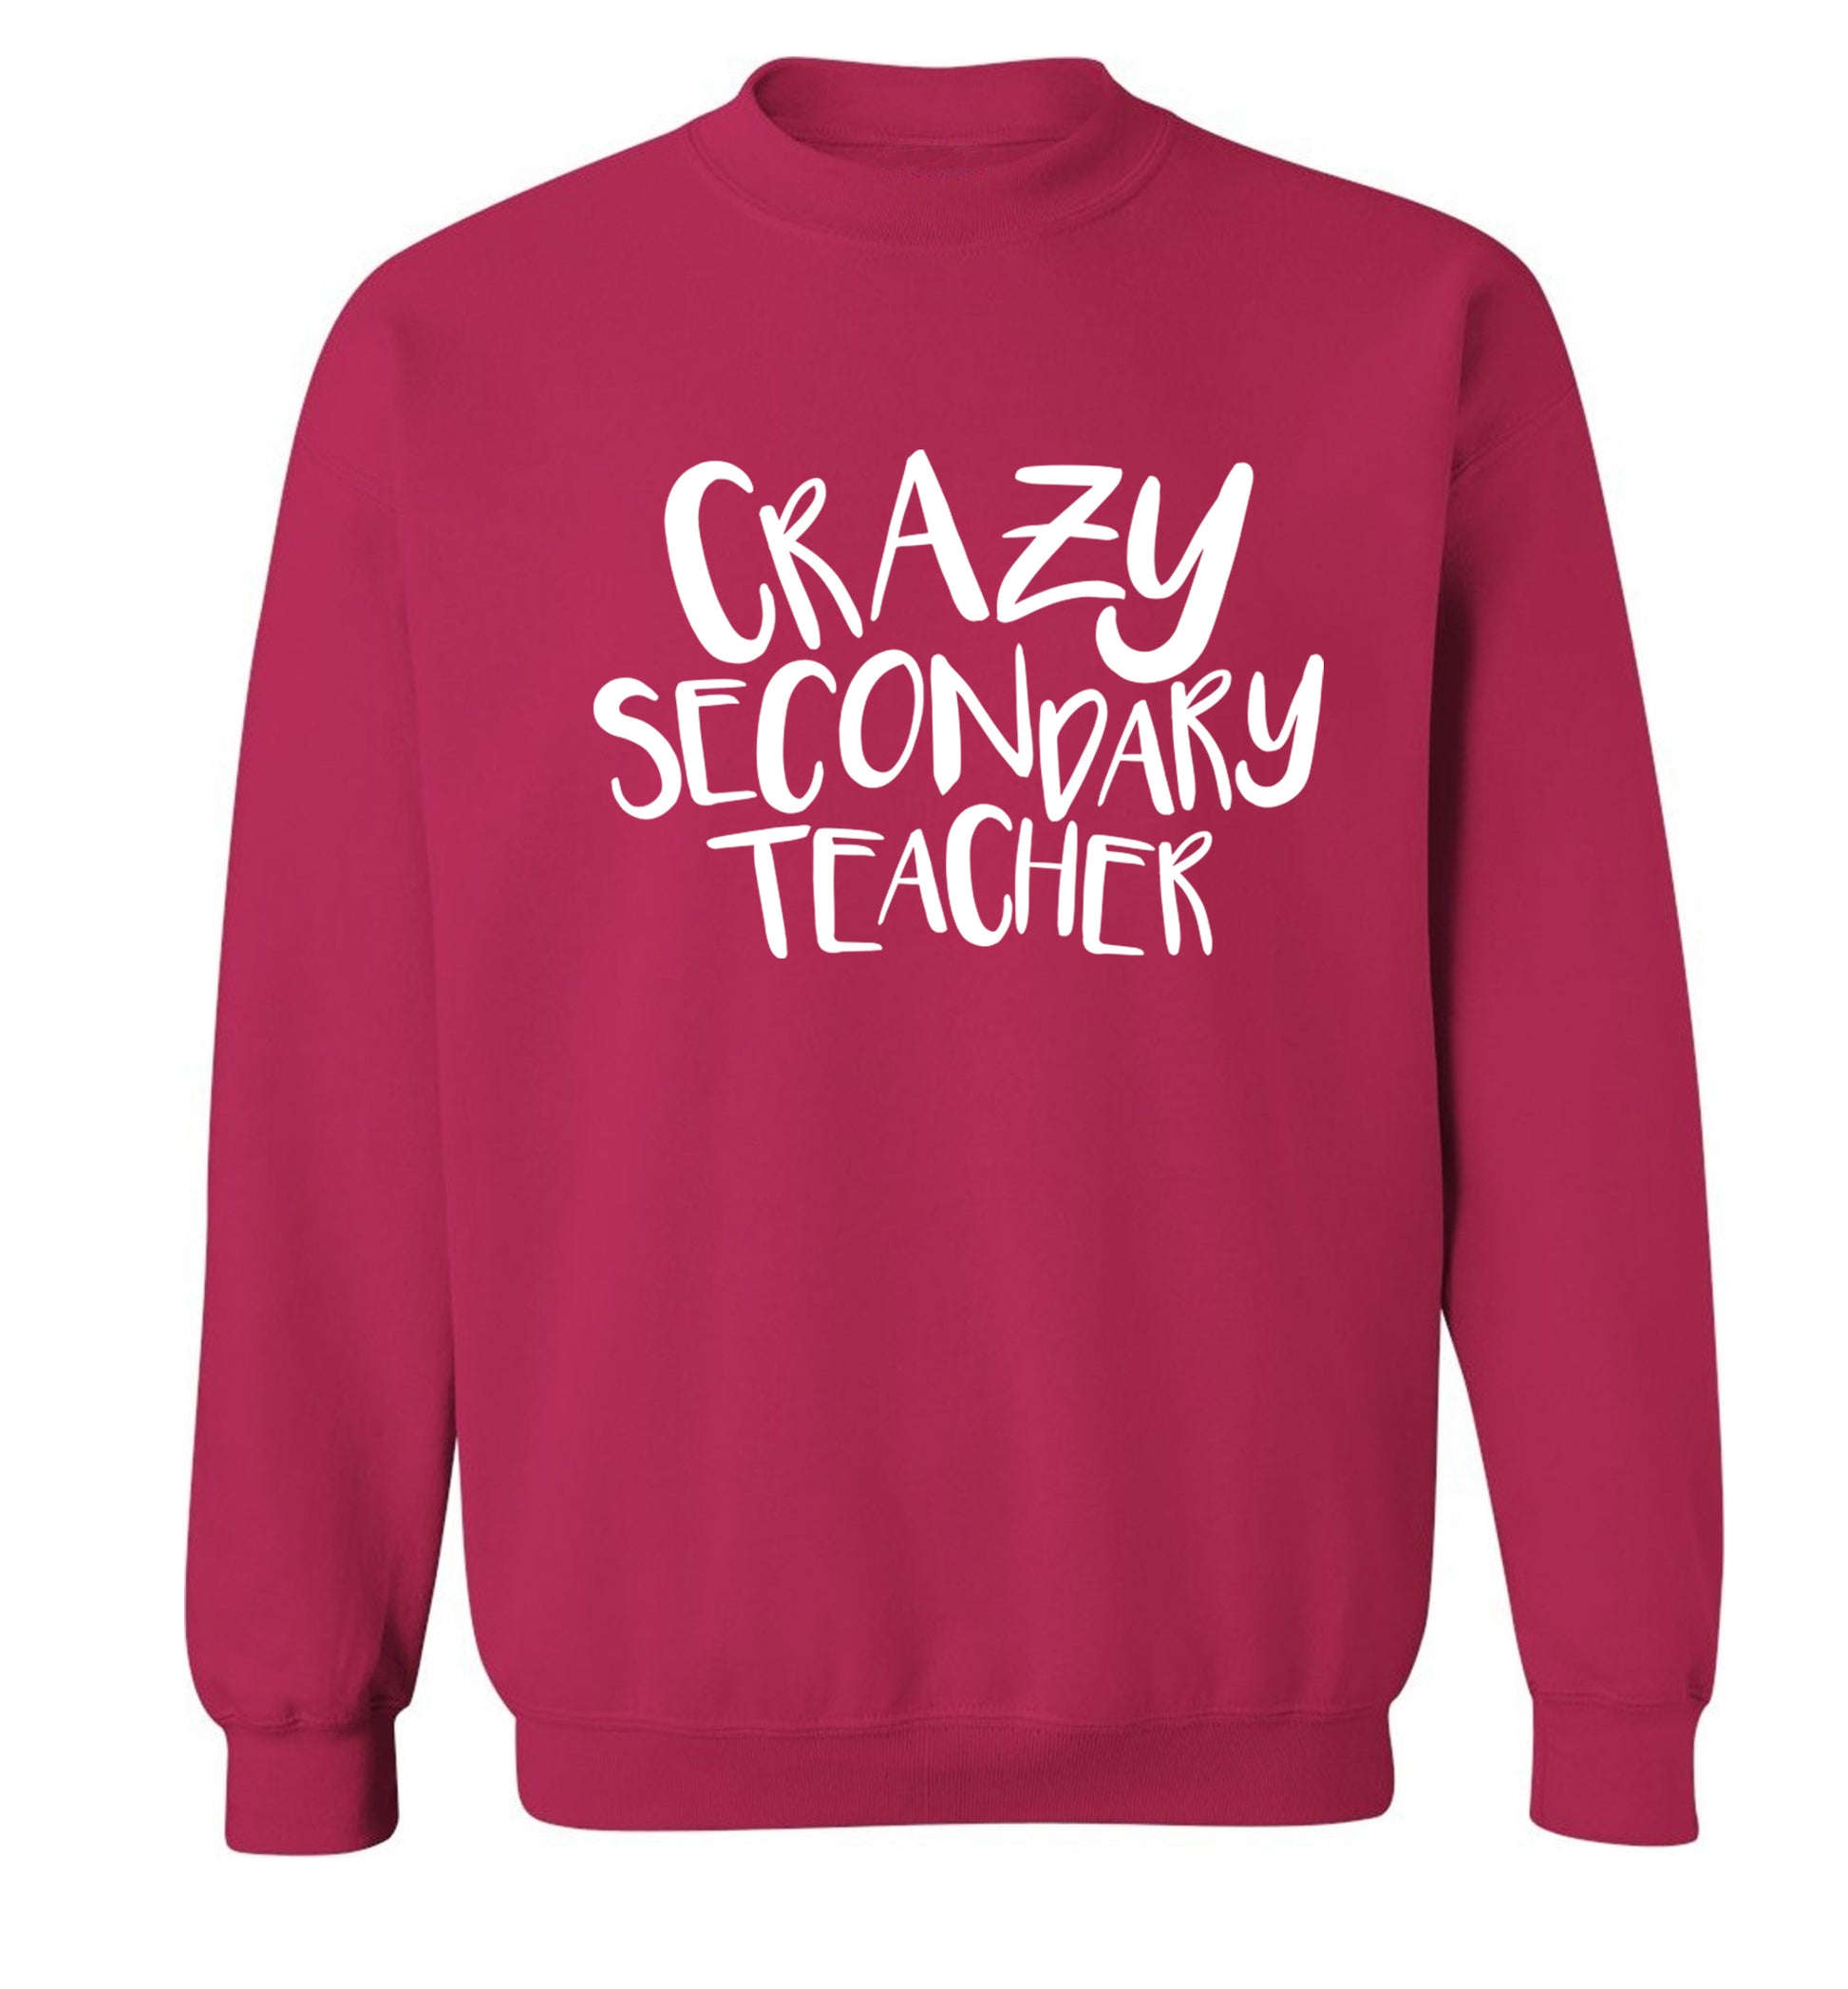 Crazy secondary teacher Adult's unisex pink Sweater 2XL